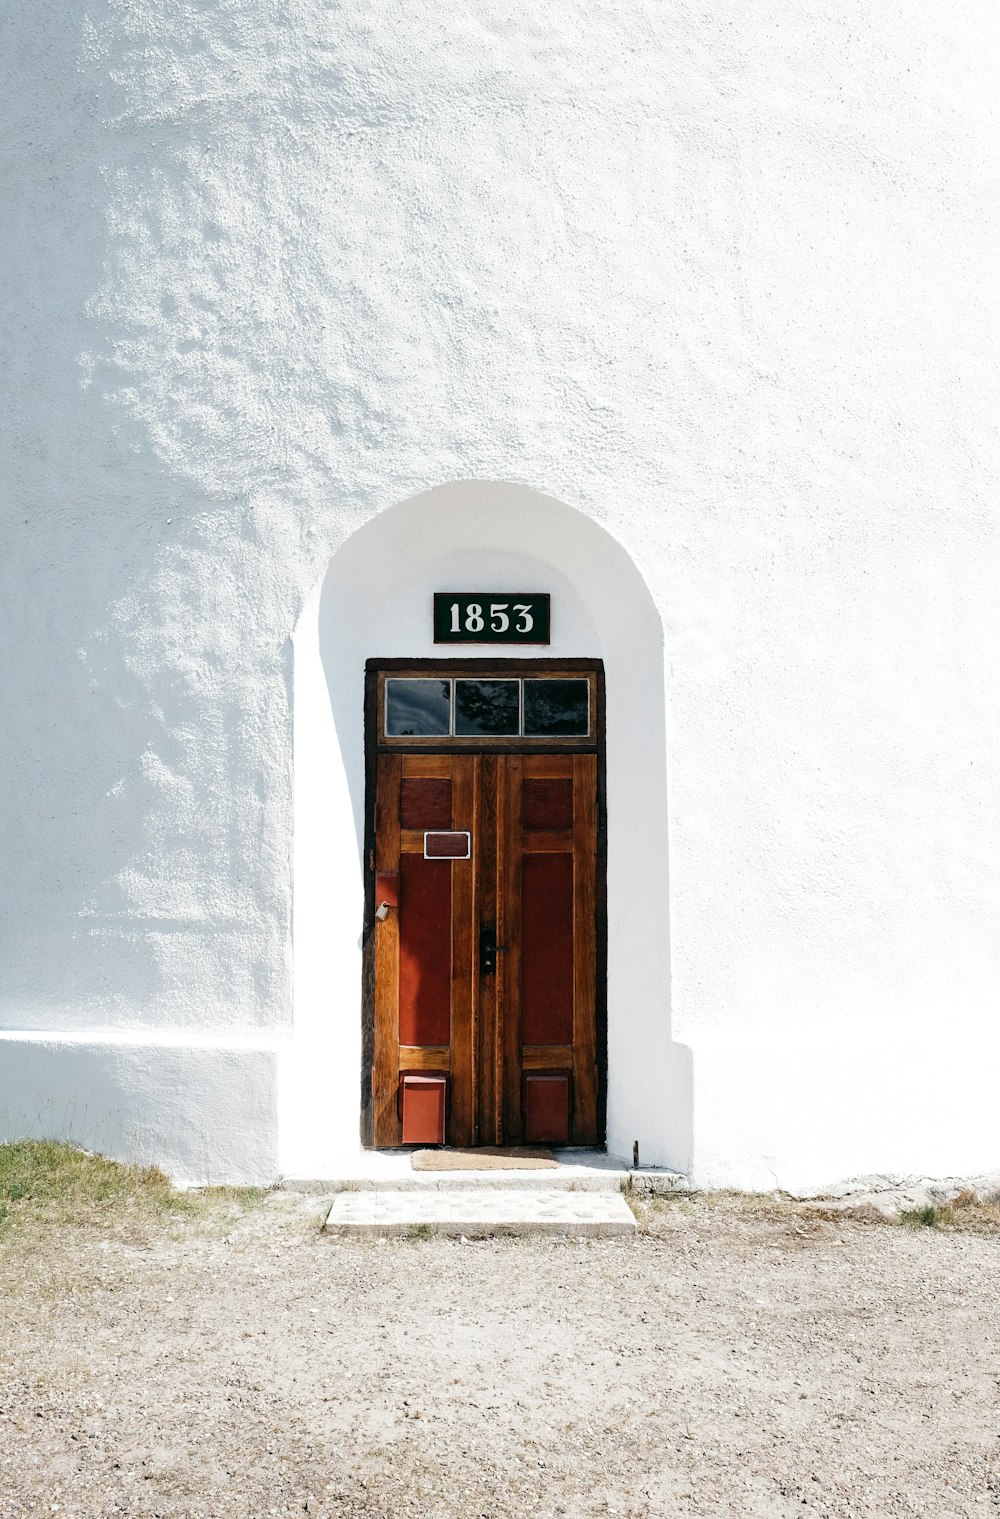 closed 1852 wooden door at daytime